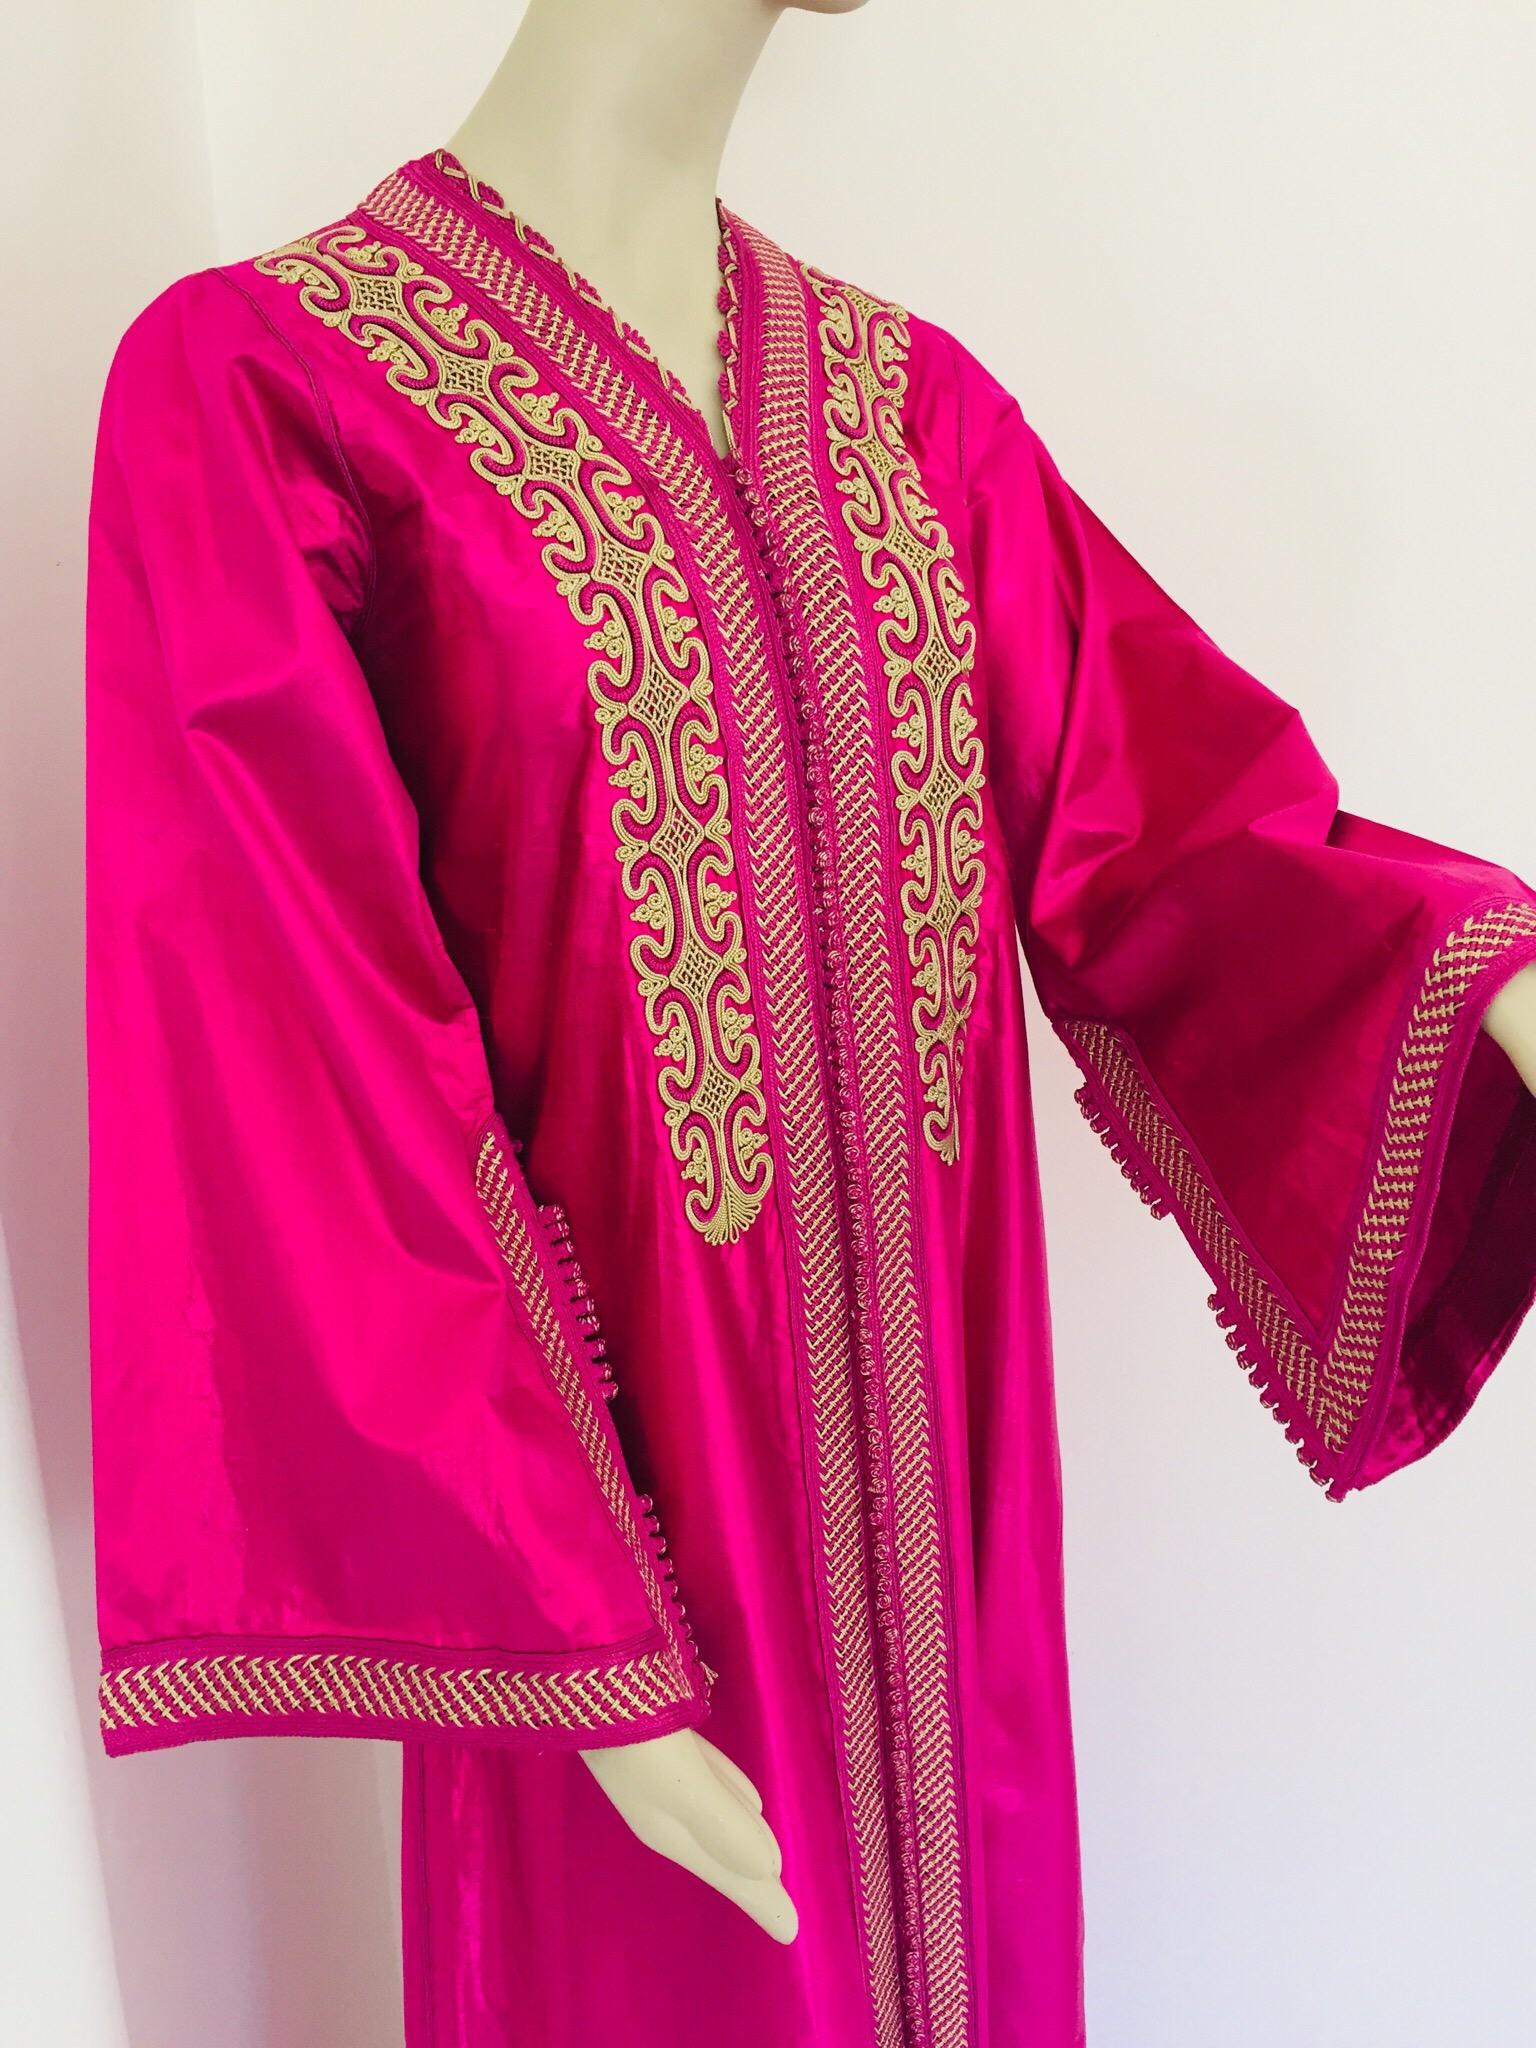 Hand-Crafted Moroccan Vintage Caftan 1970s Kaftan Maxi Dress Hot Pink Fuchsia